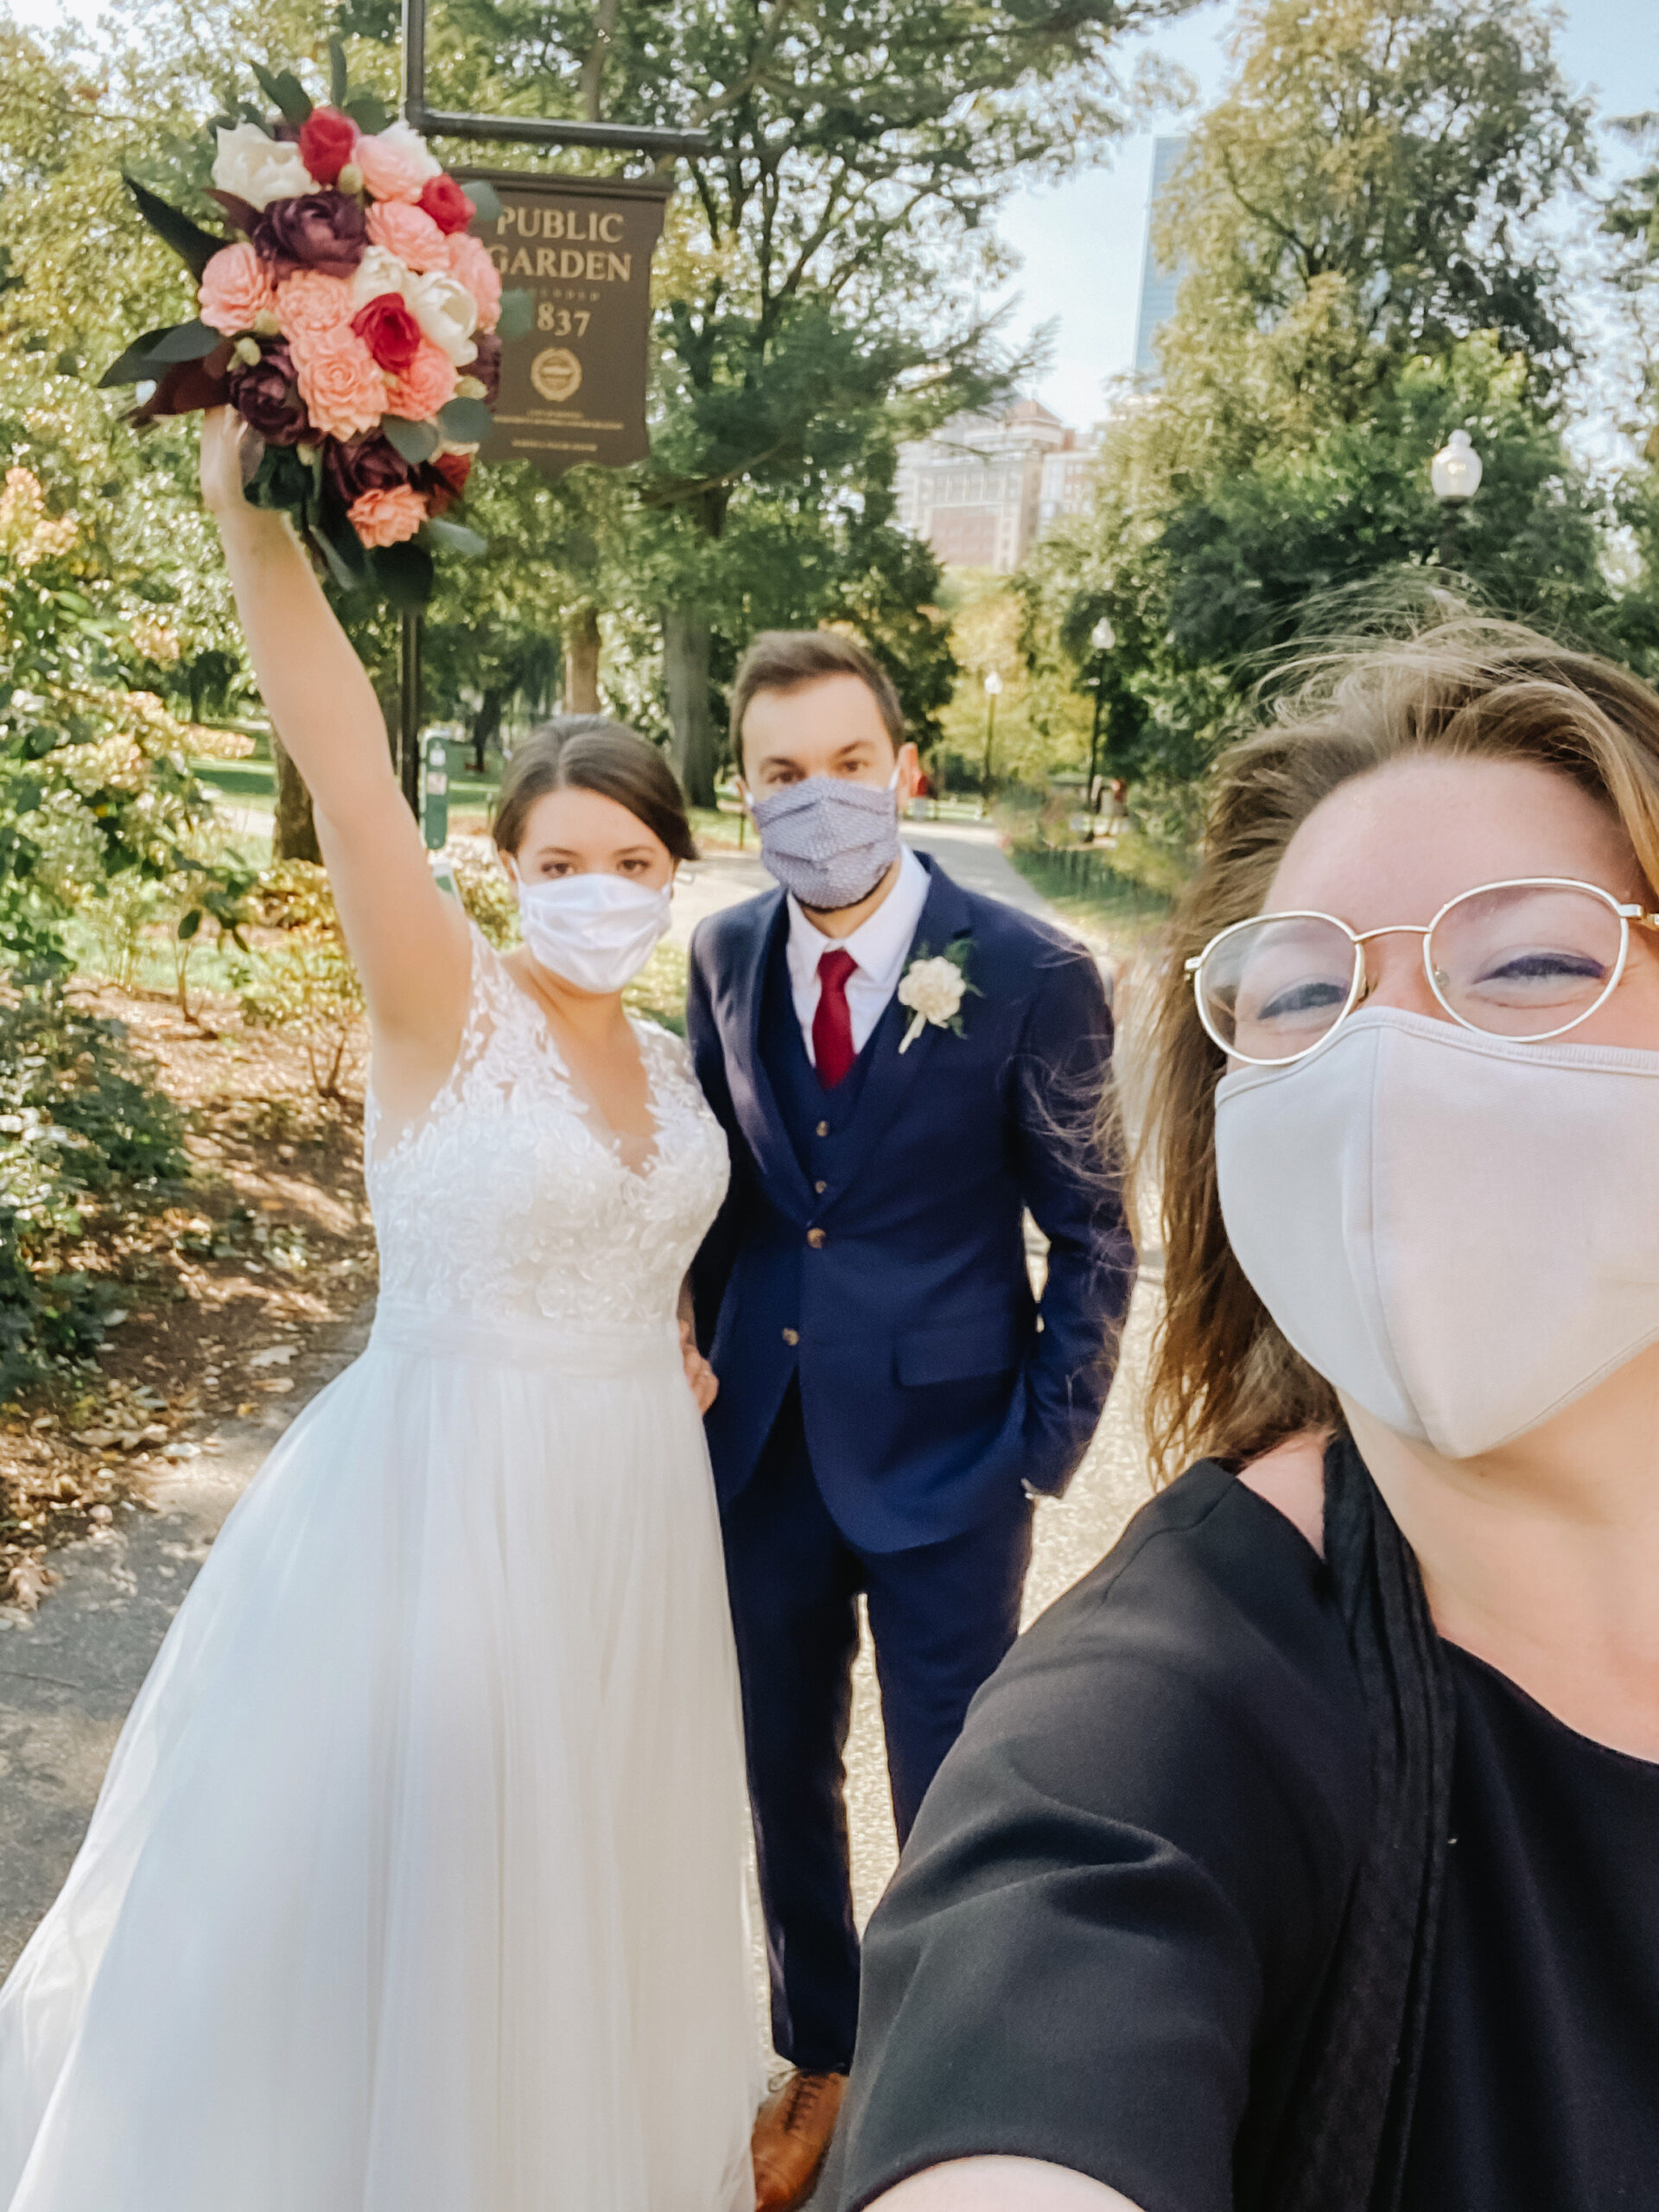 Lena-Mirisola-Behind-The-Scenes-Wedding-Photographer-Boston-2020-Selfie-038.JPG